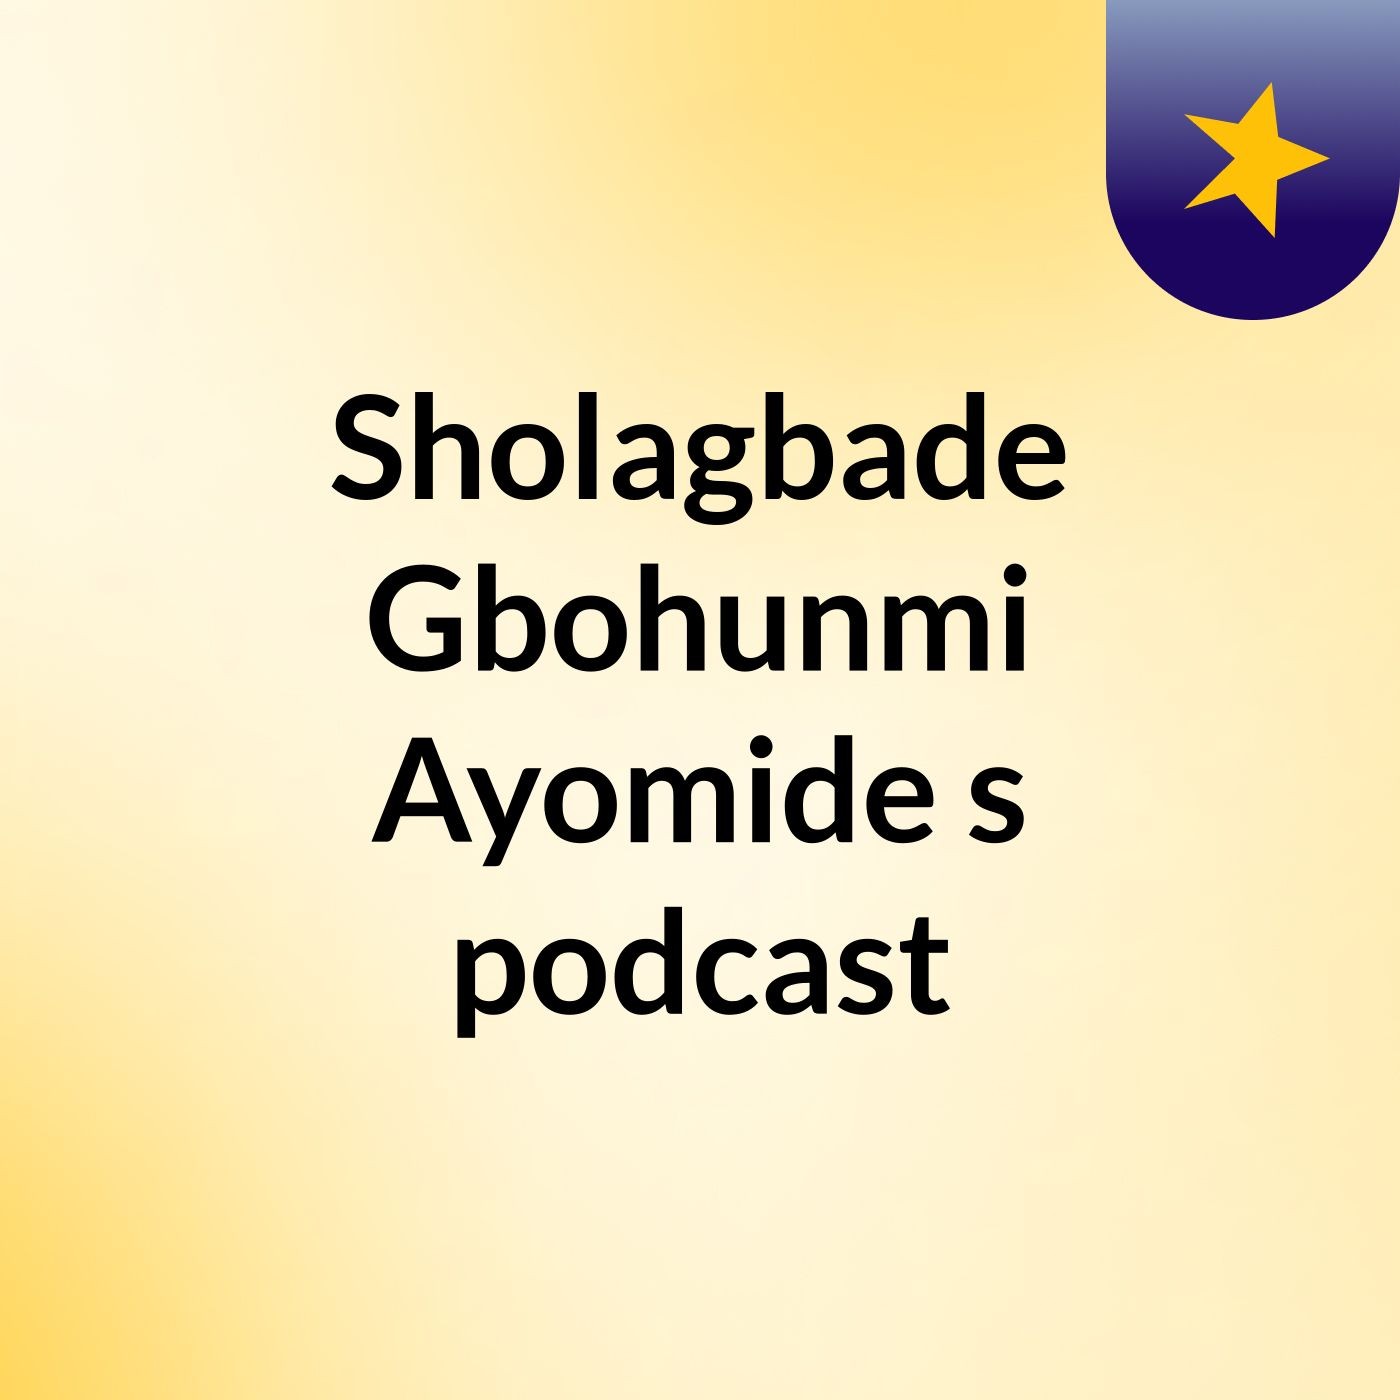 Sholagbade Gbohunmi Ayomide's podcast